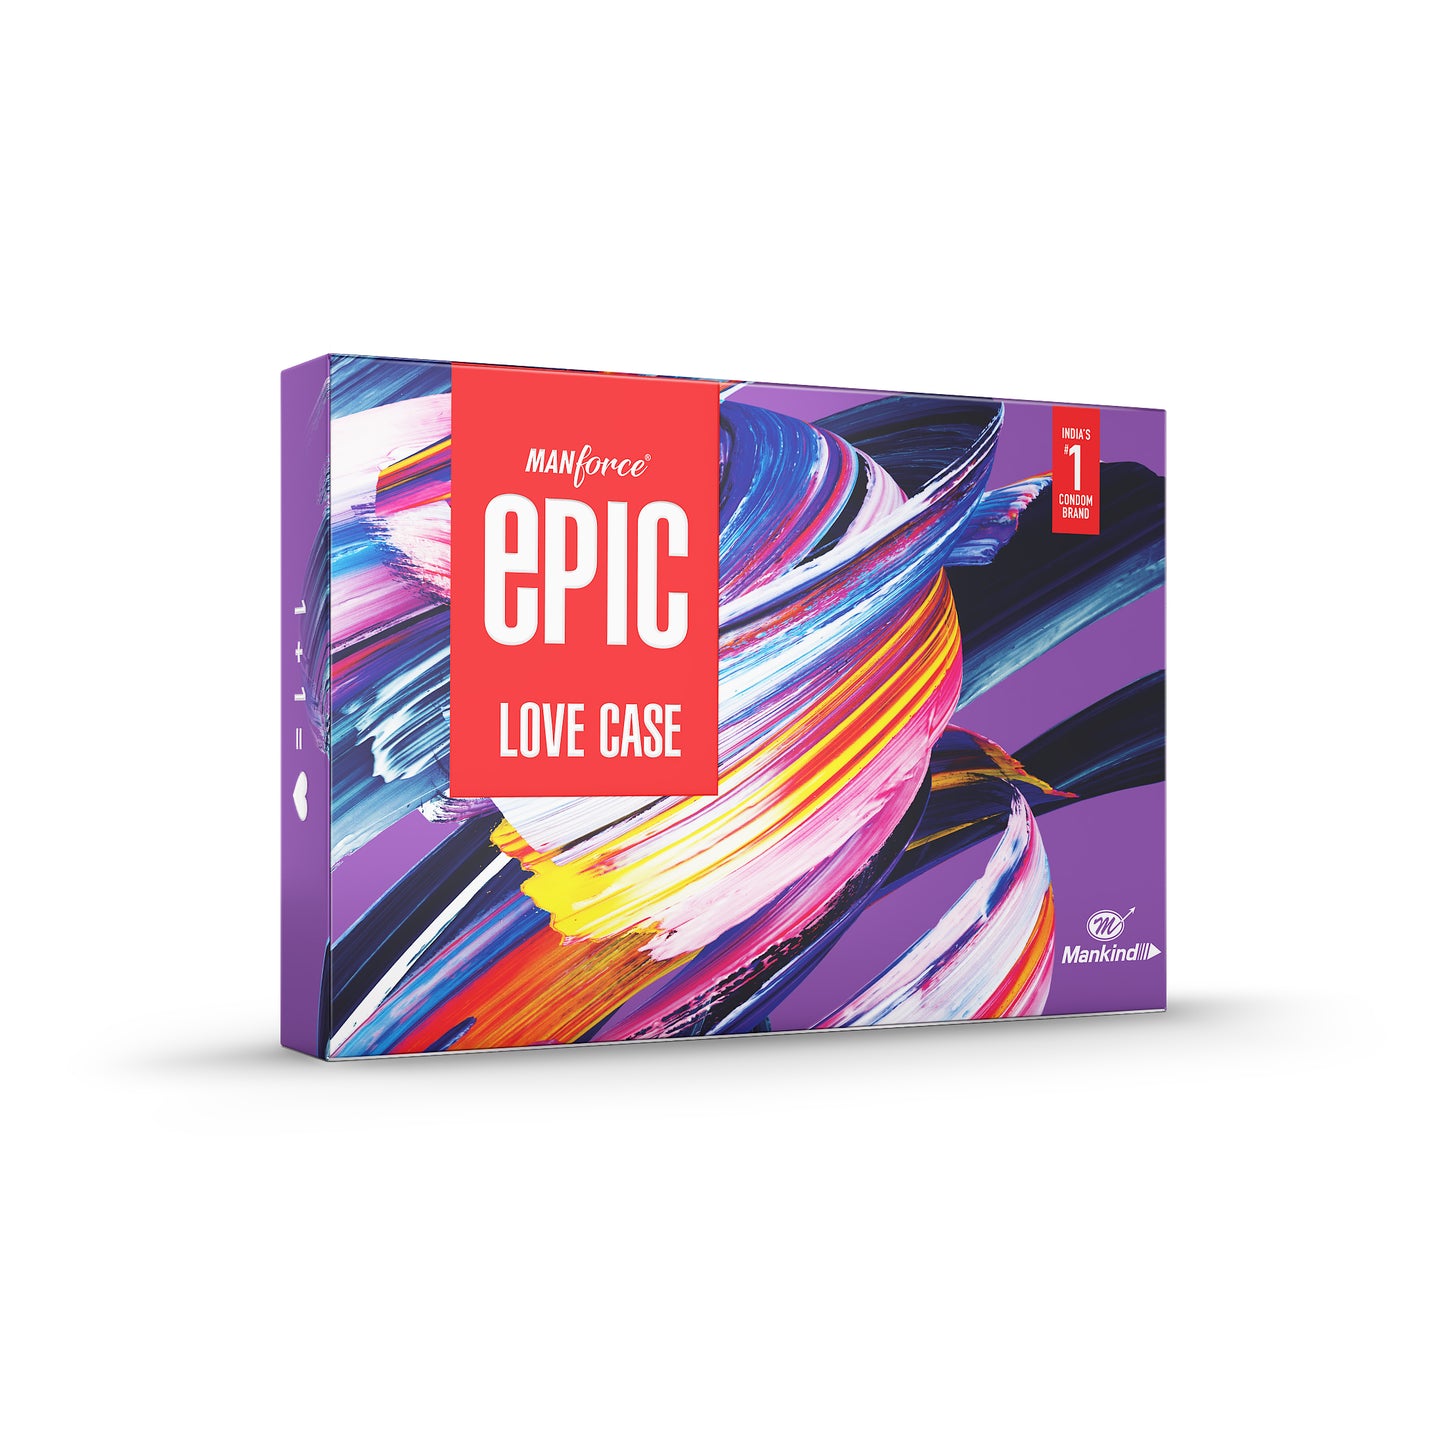 Manforce Epic Love Case| Valentine gift box for couples| Multi flavoured Condoms 12pcs| Epic Lube 1pc| Love dice 2pcs| Love feather 1pc| Massage oil 1pc| Blindfold 1pc